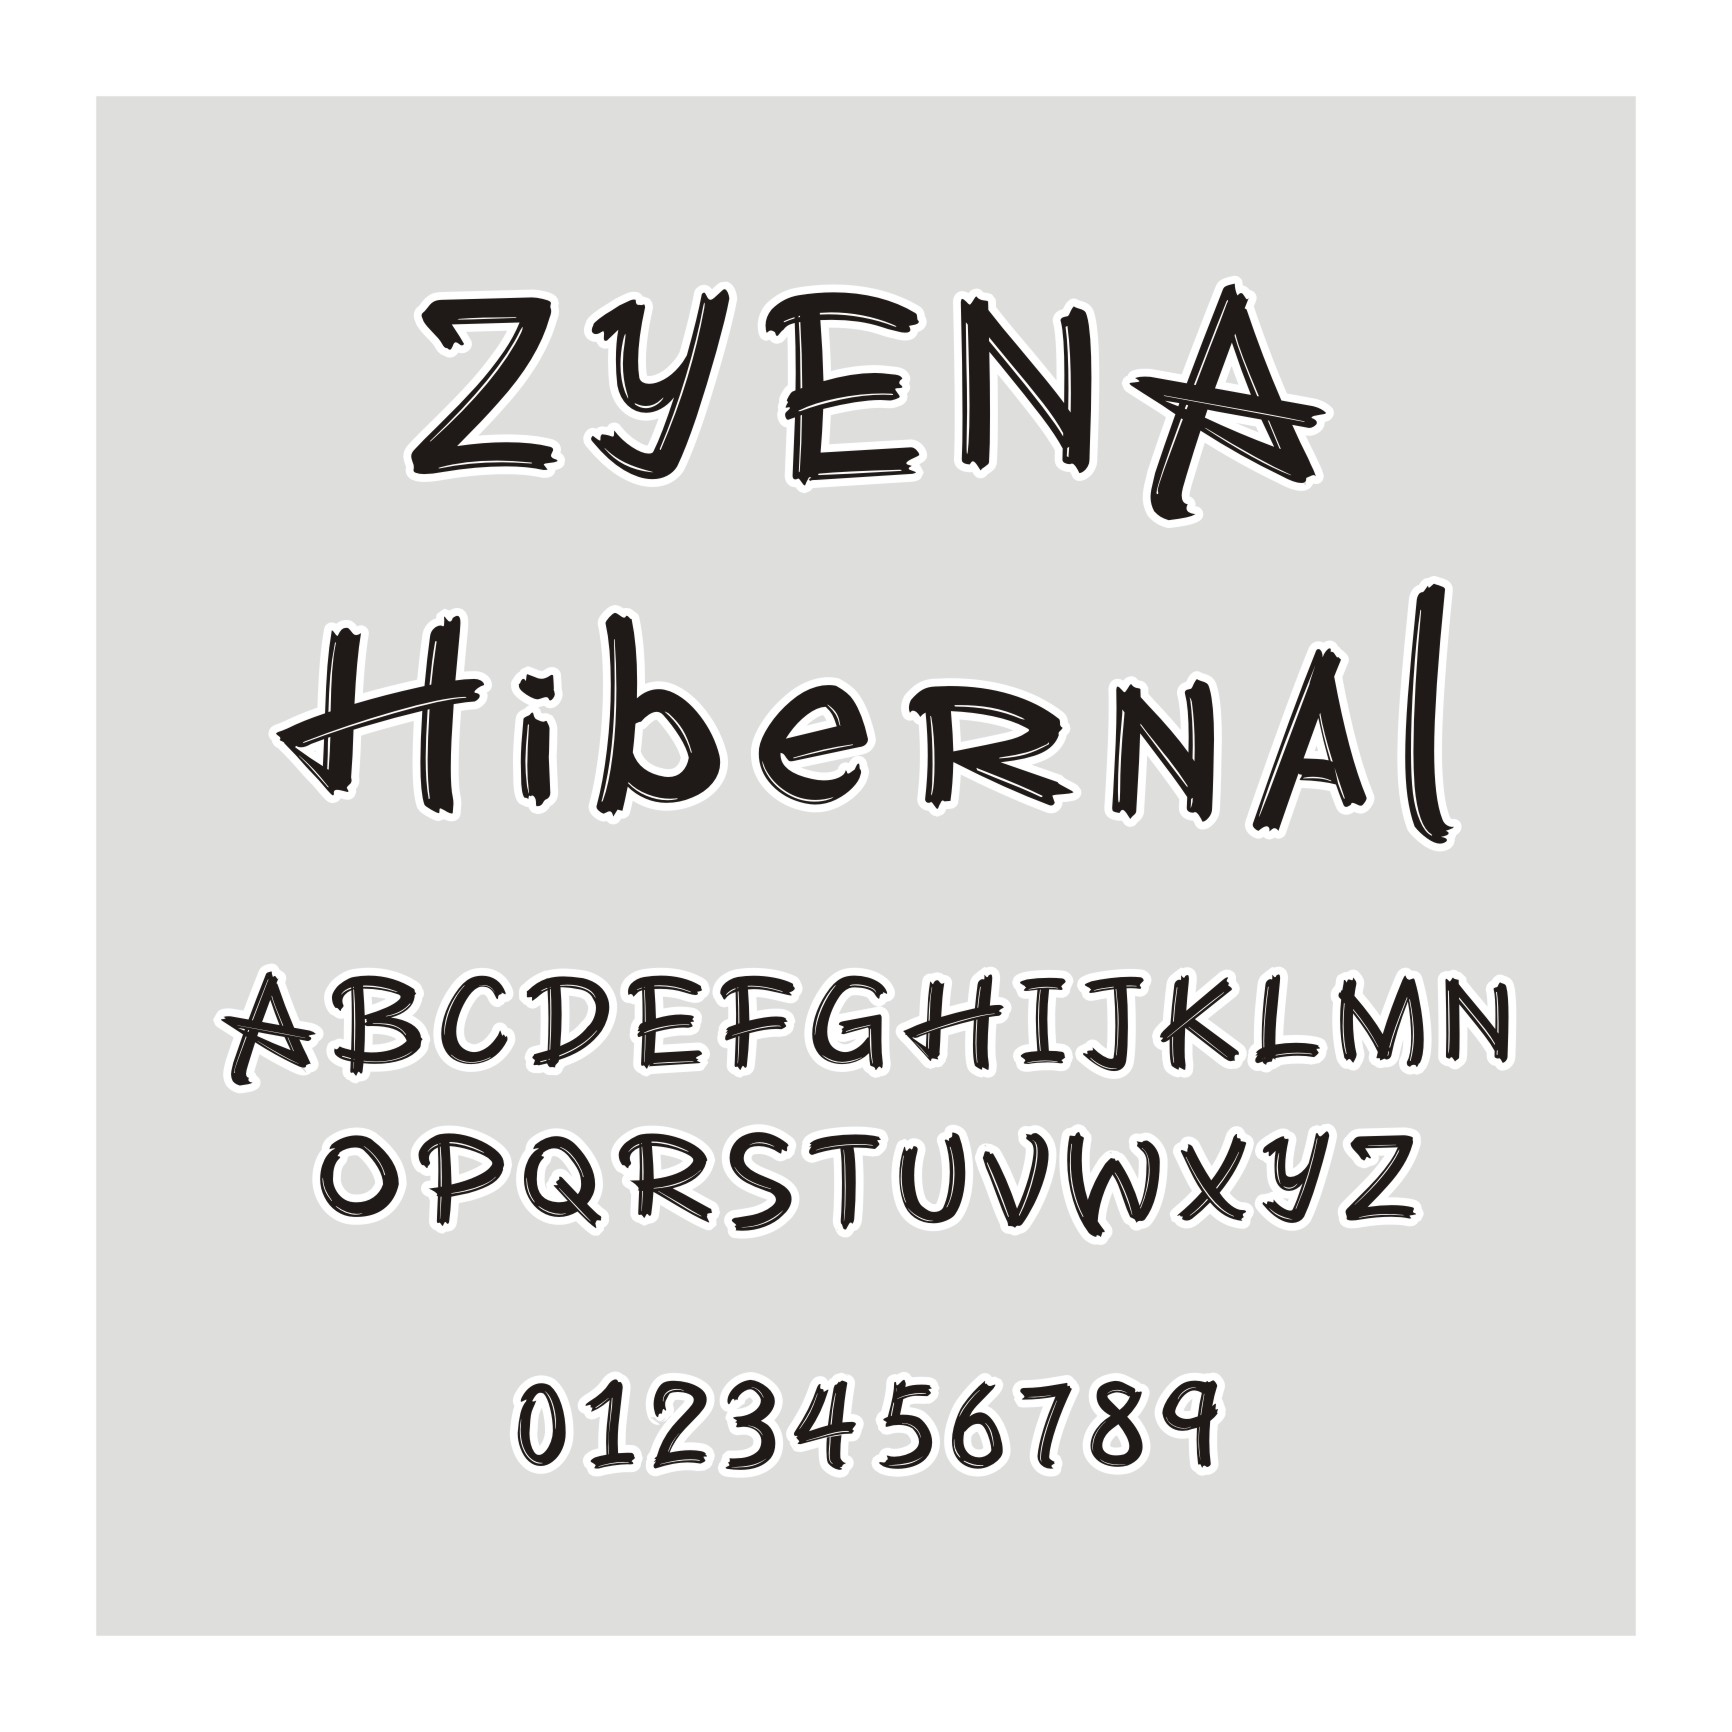 ZYENA Hibernal